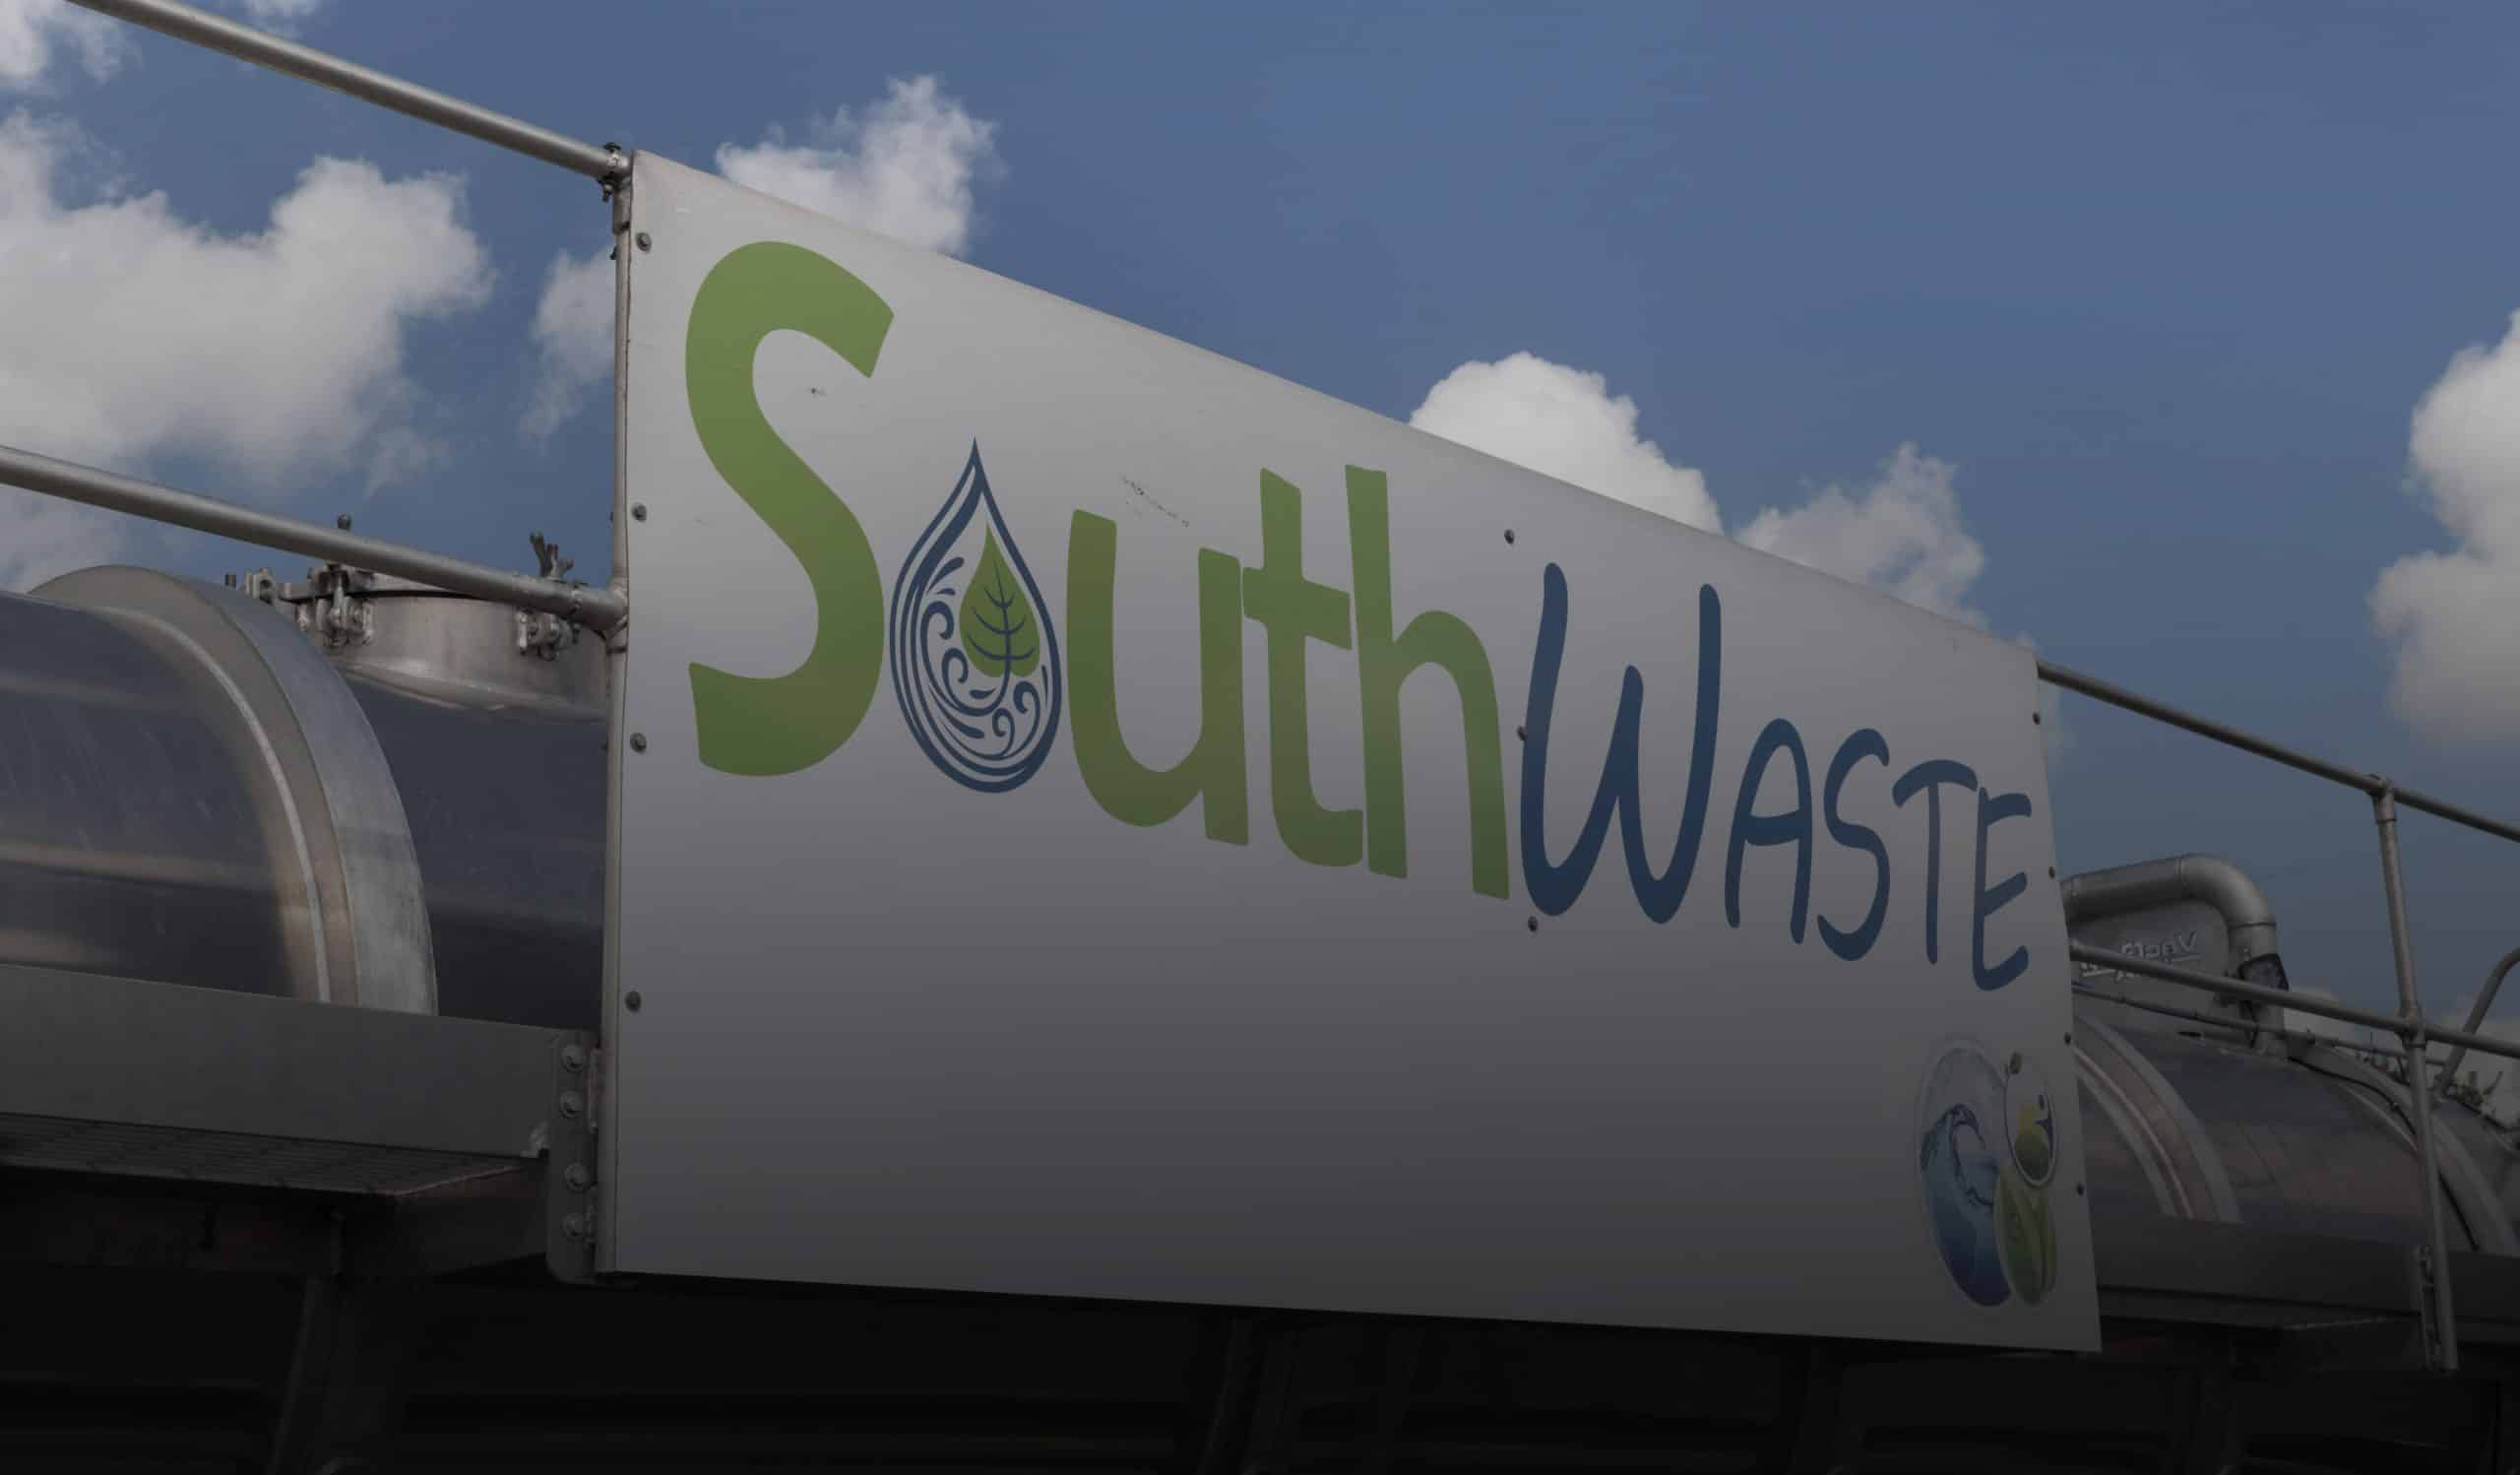 SouthWaste truck logo